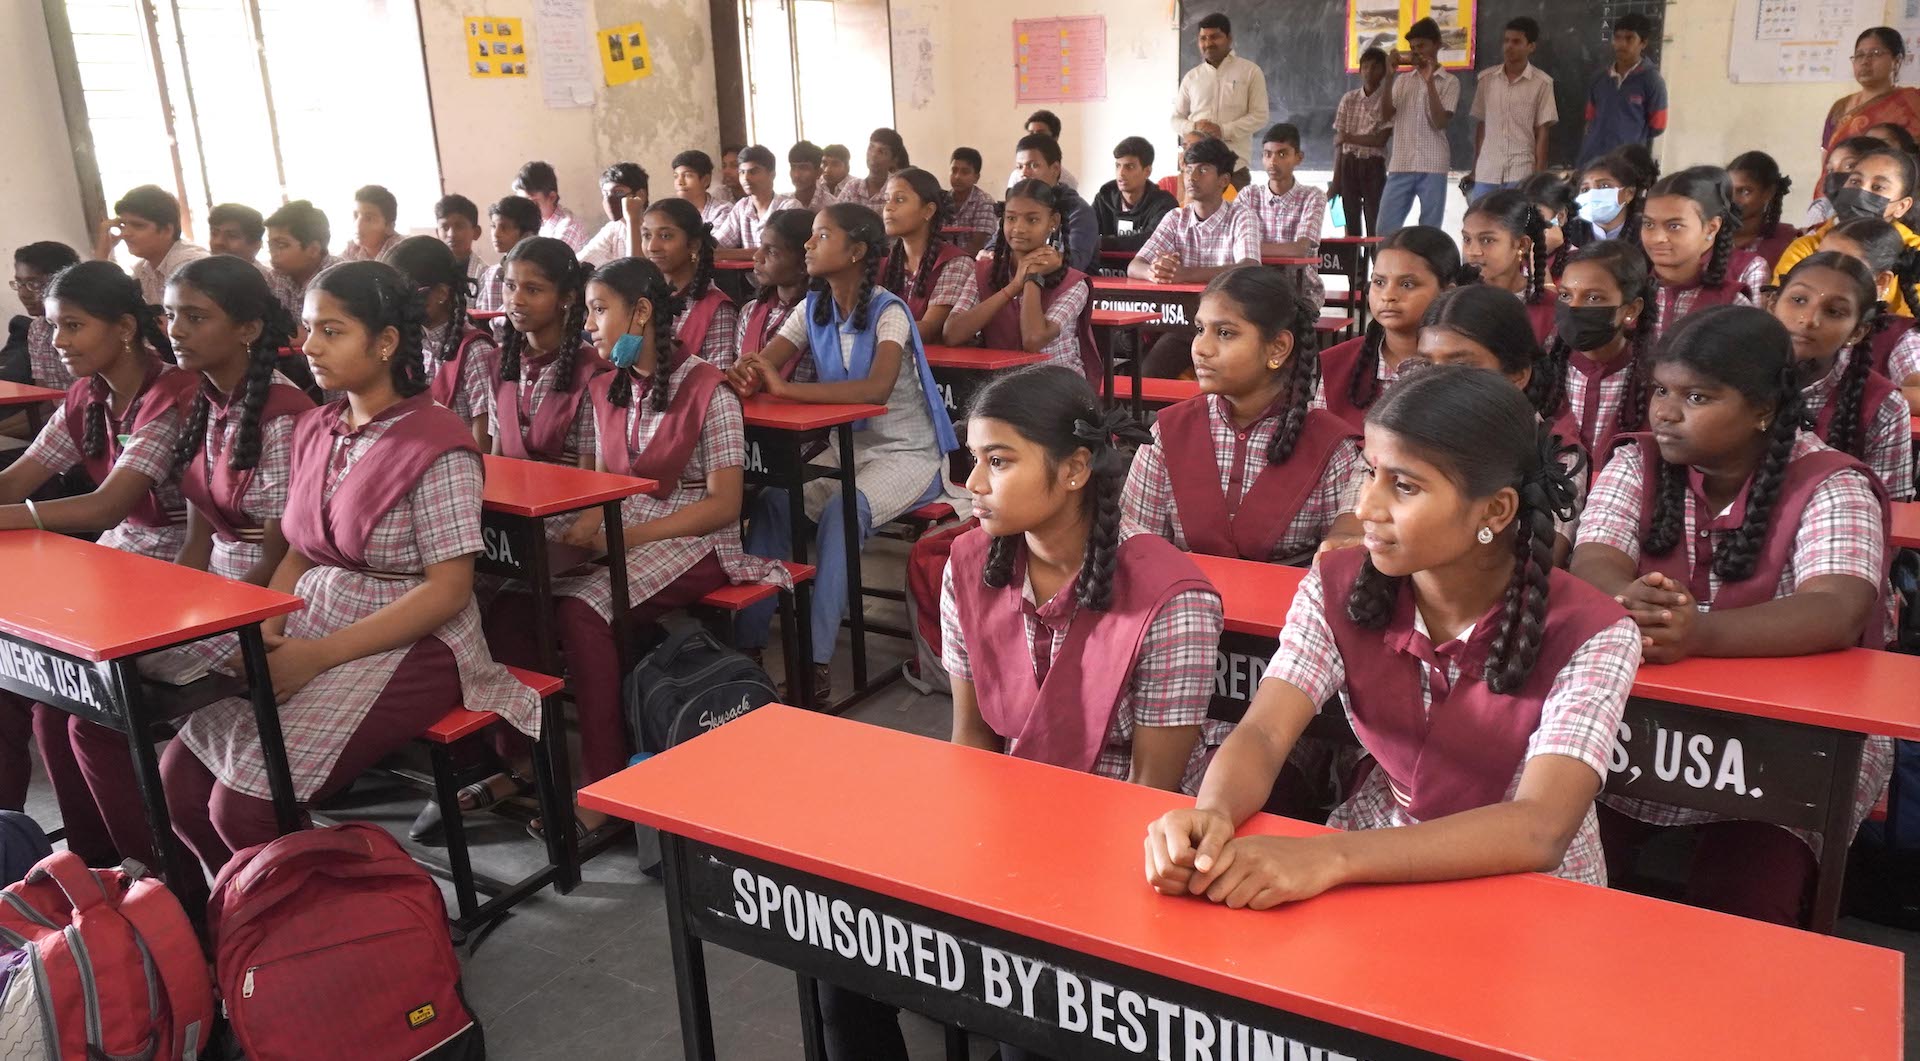 46 school desks worth Rs 1.6 lakh donated to a Govt School at Jeedimetla